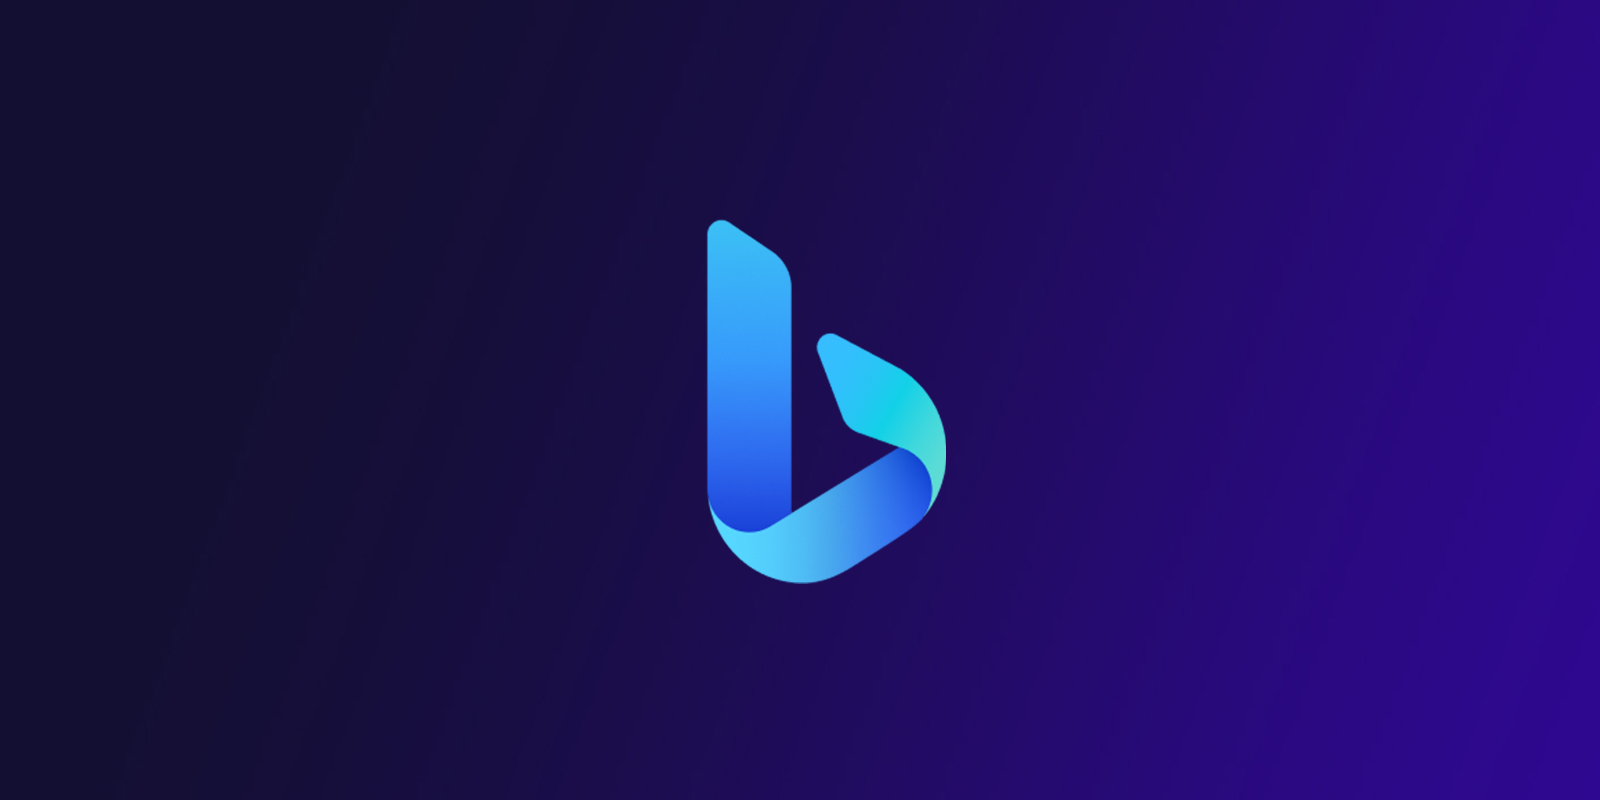 Microsoft Bing’s New BingBot Goes Live